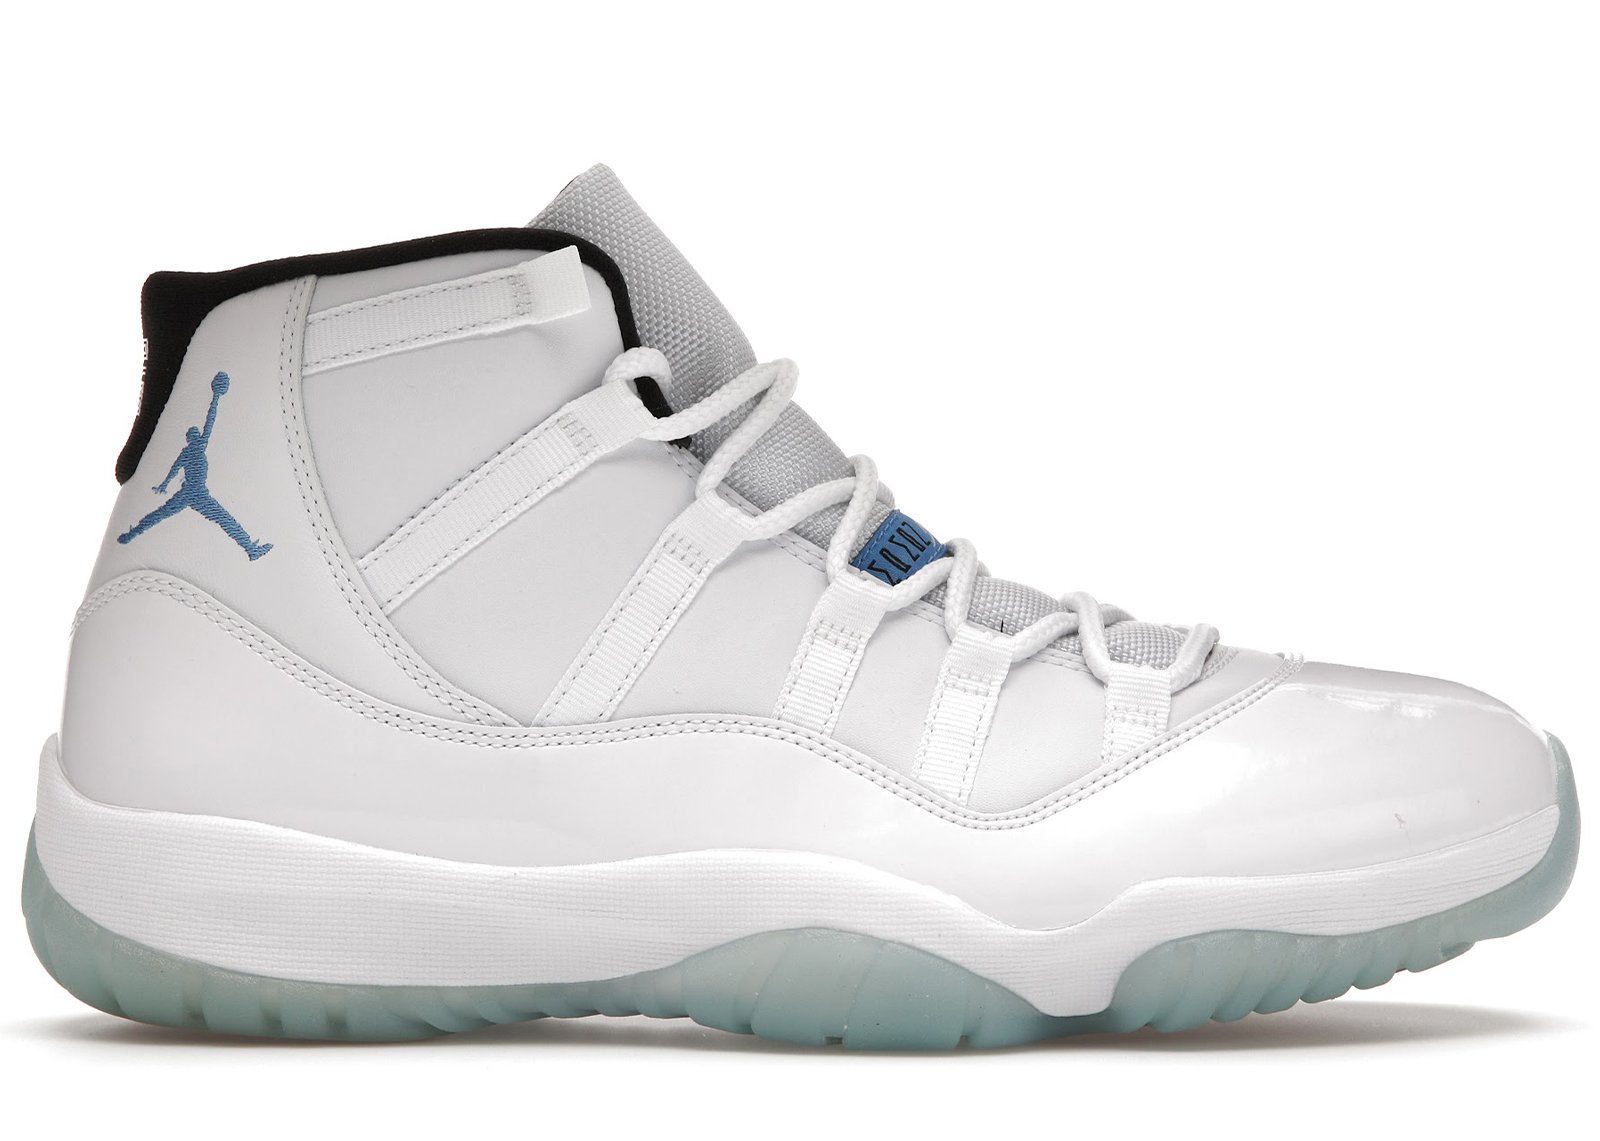 Jordan 11 Retro Legend Blue (2014) sneakers